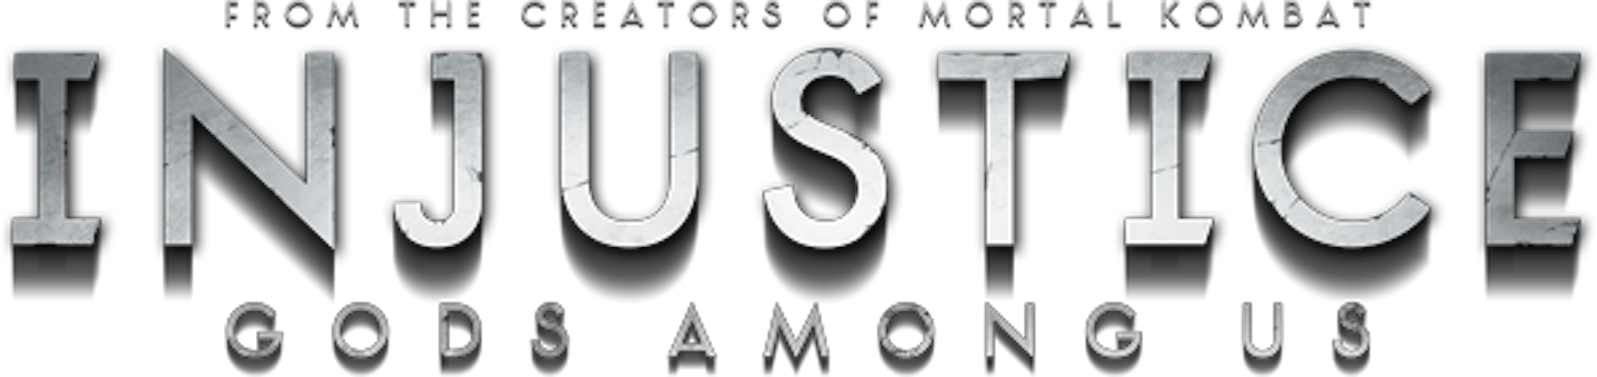 Injustice logo fond Transparent